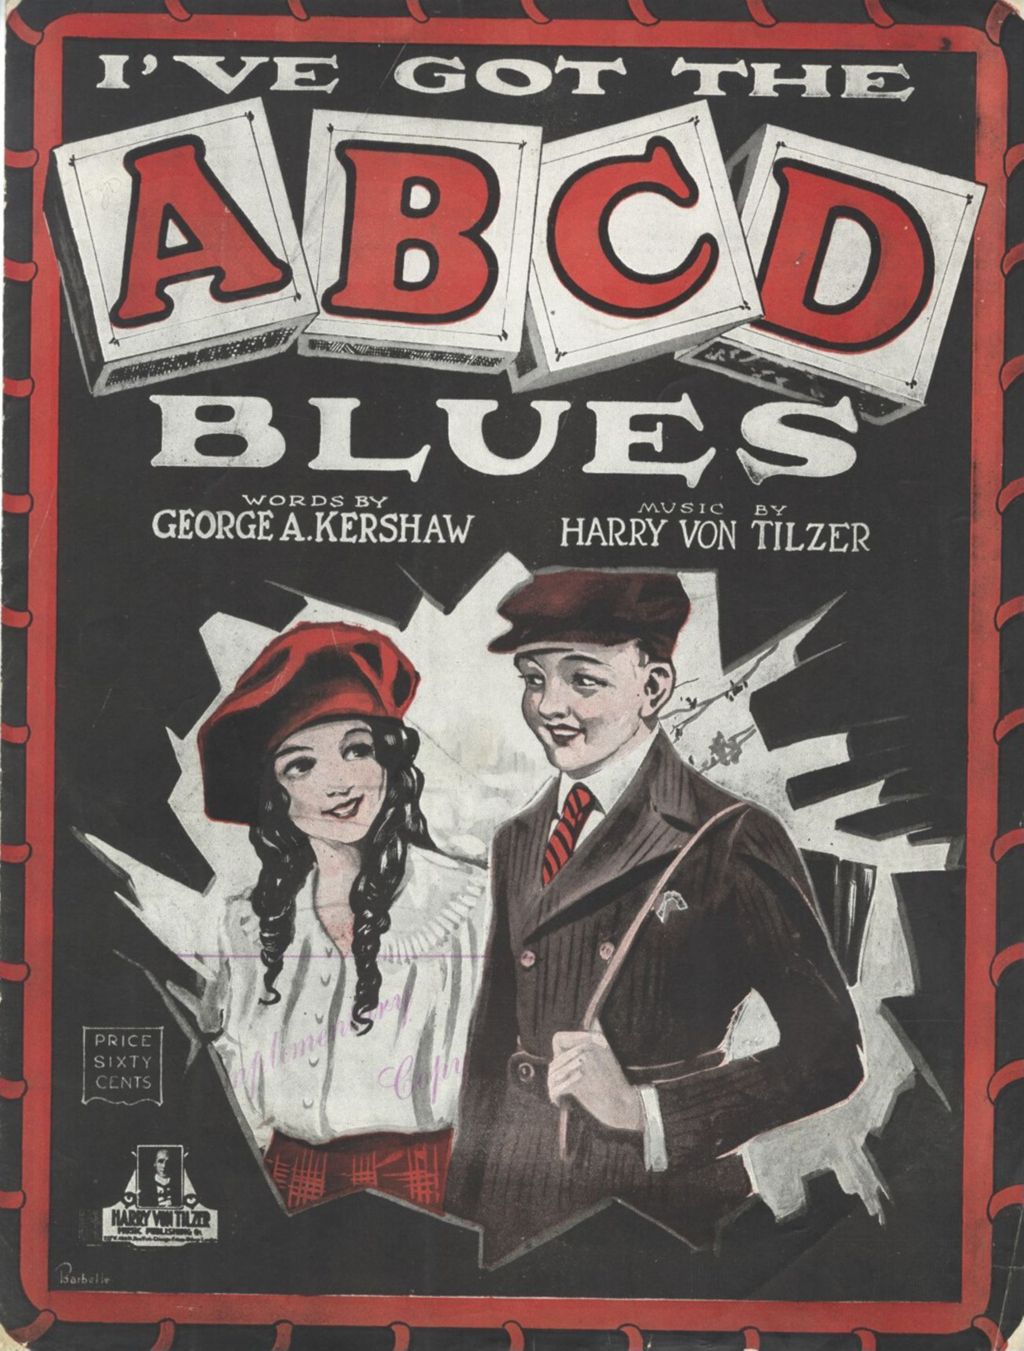 A.B.C.D. Blues